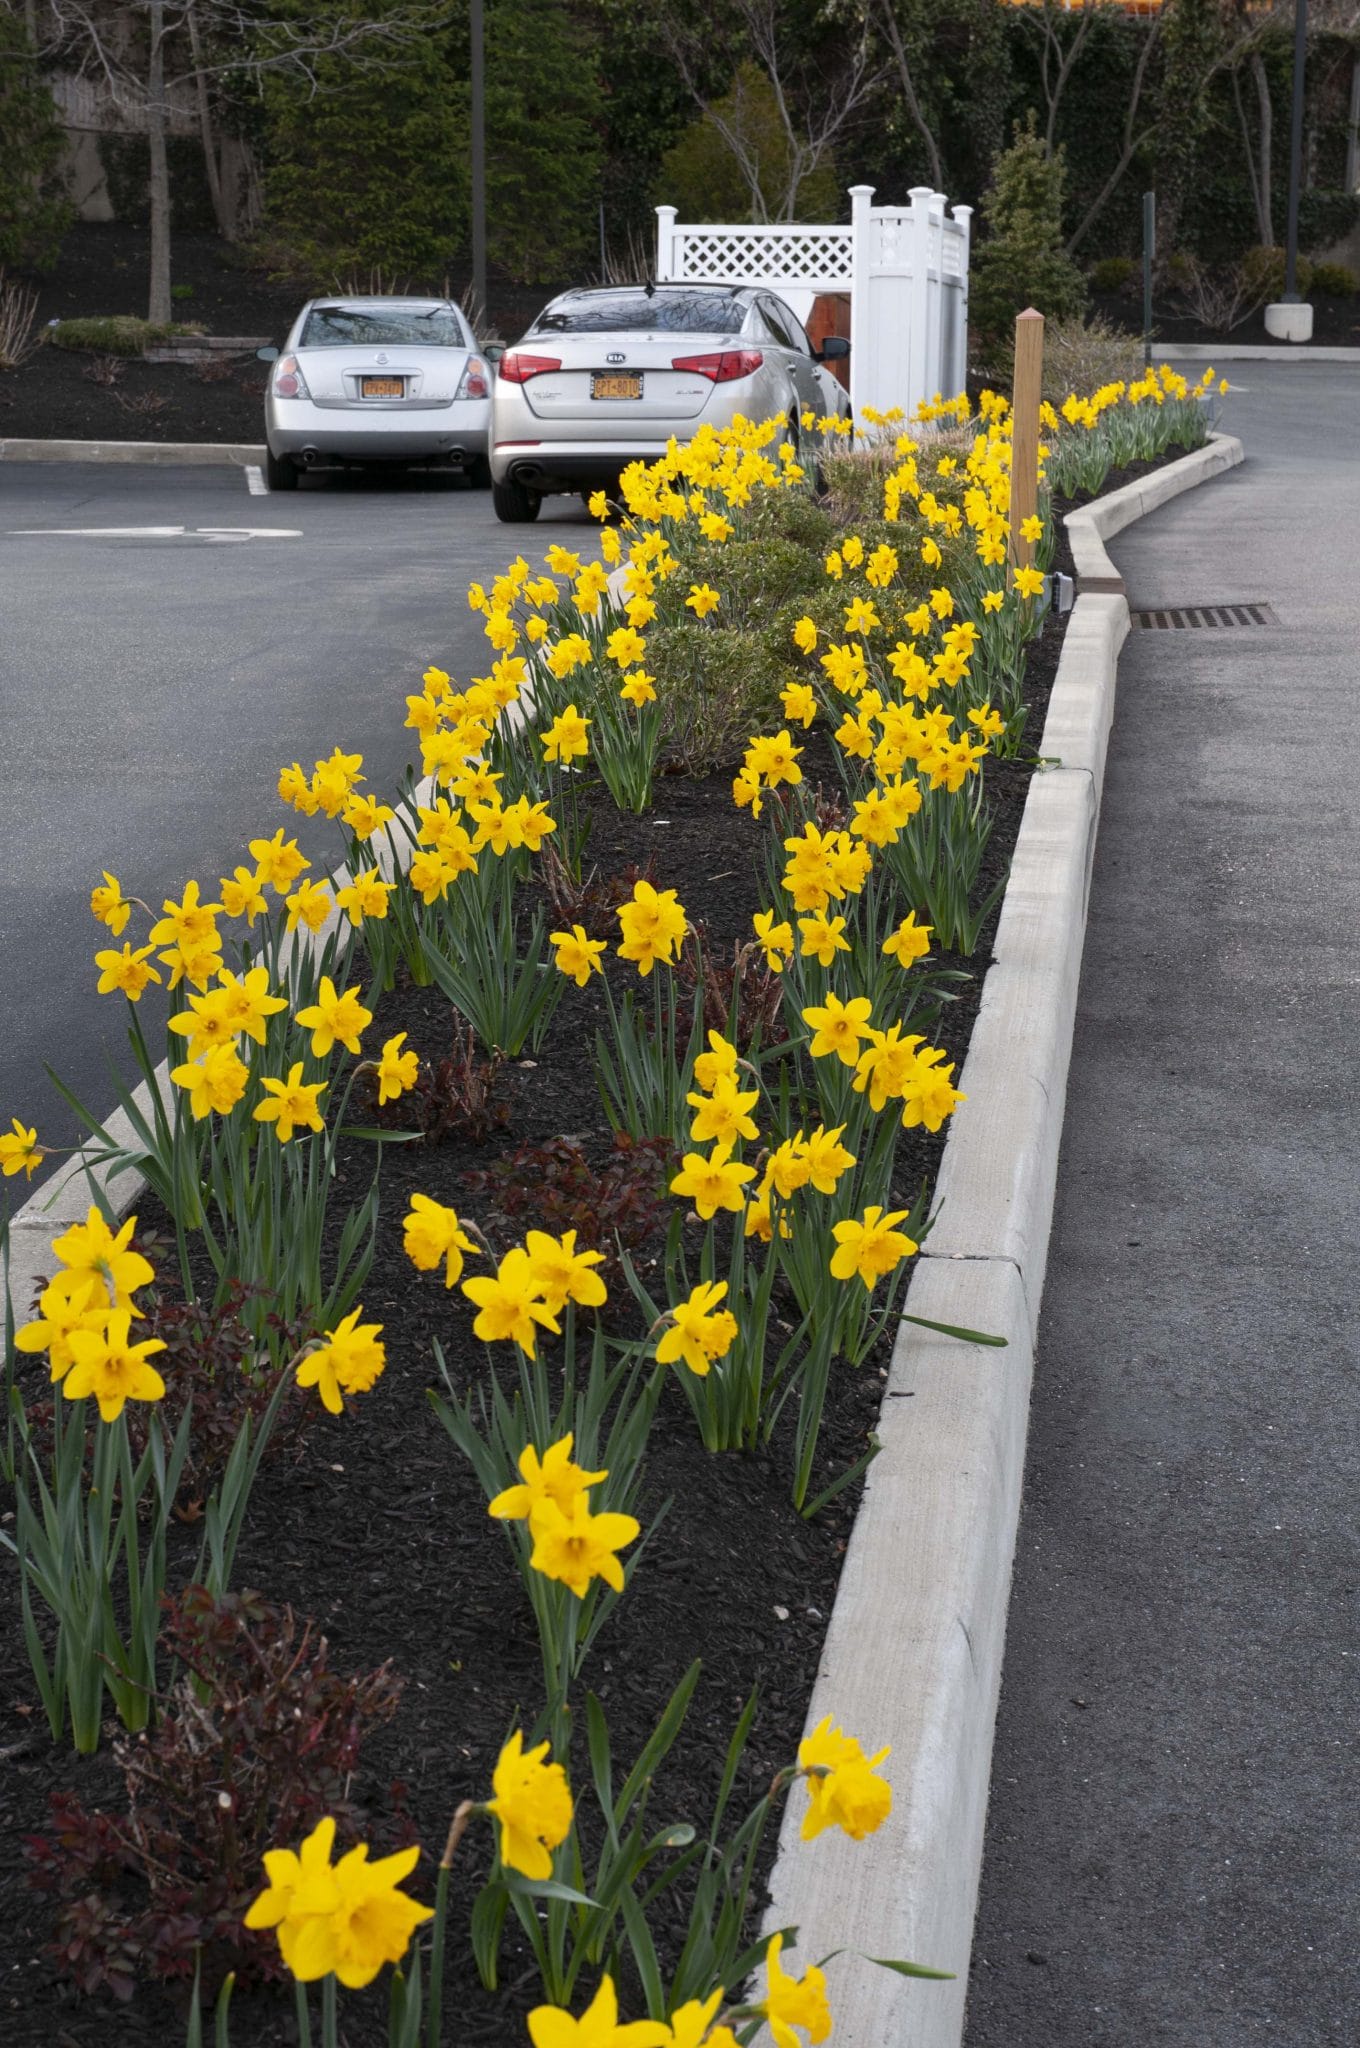 Golden Harvest daffodils